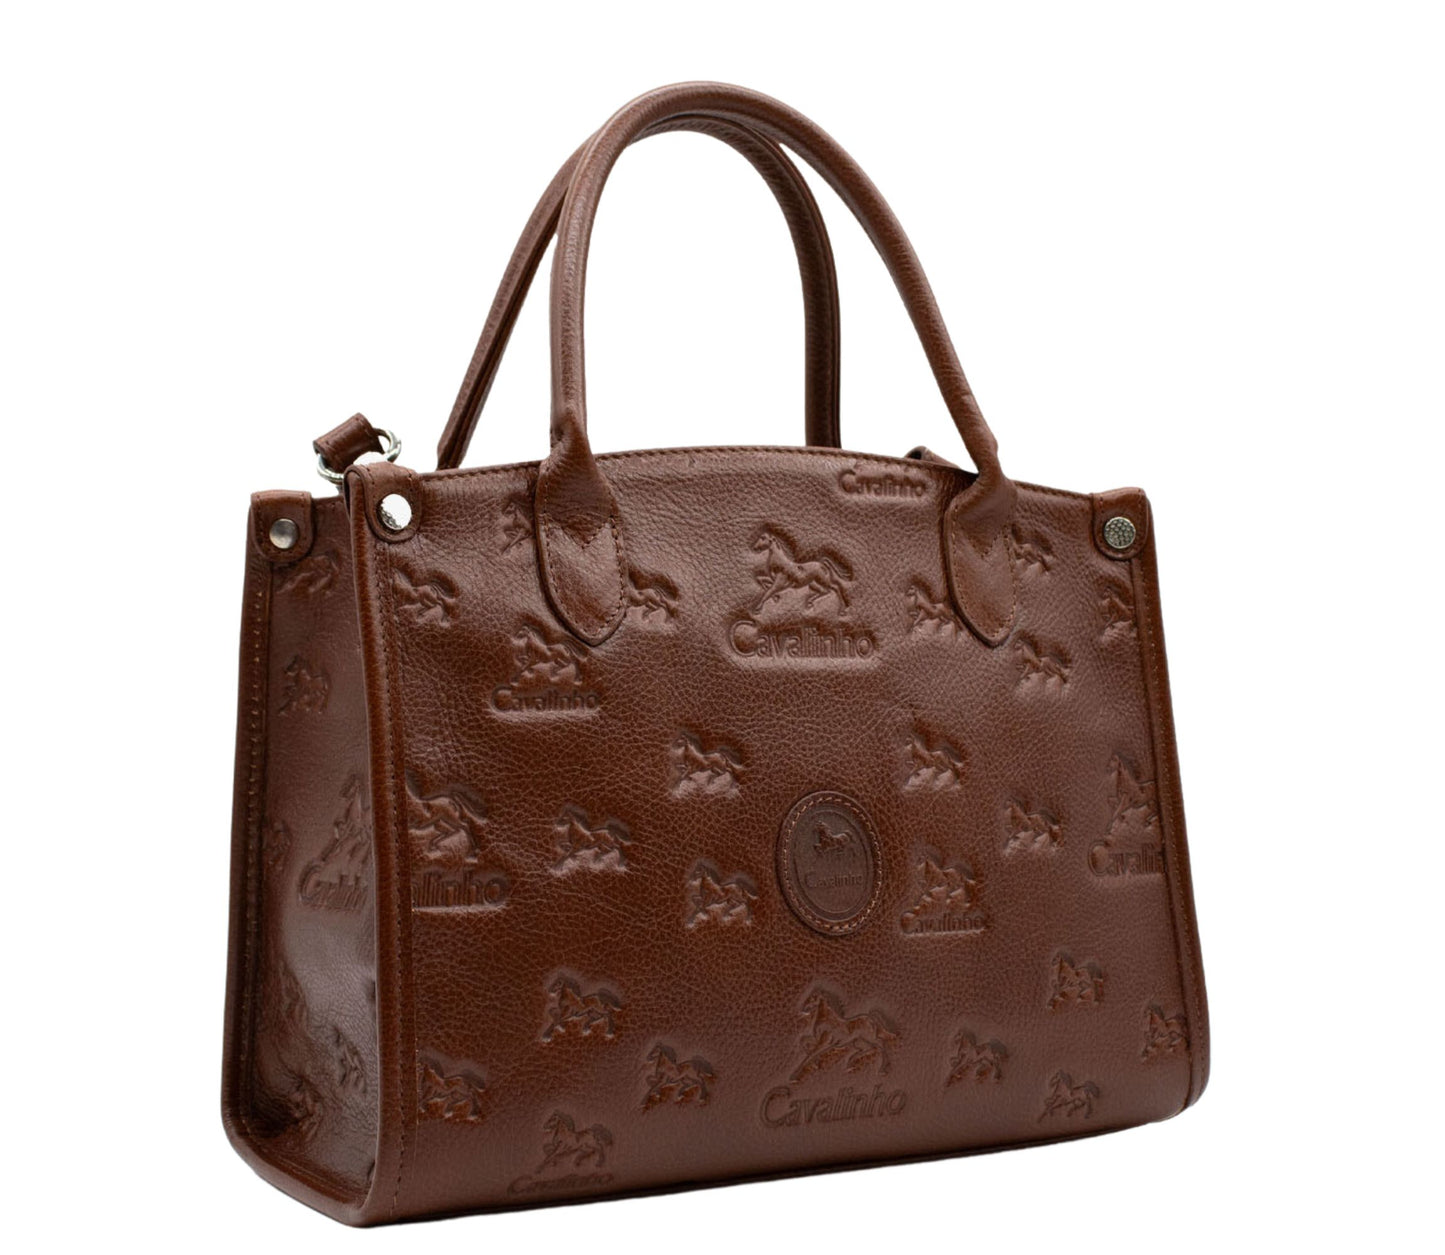 Cavalinho Cavalo Lusitano Leather Handbag - SaddleBrown - 18090480.13.99_2